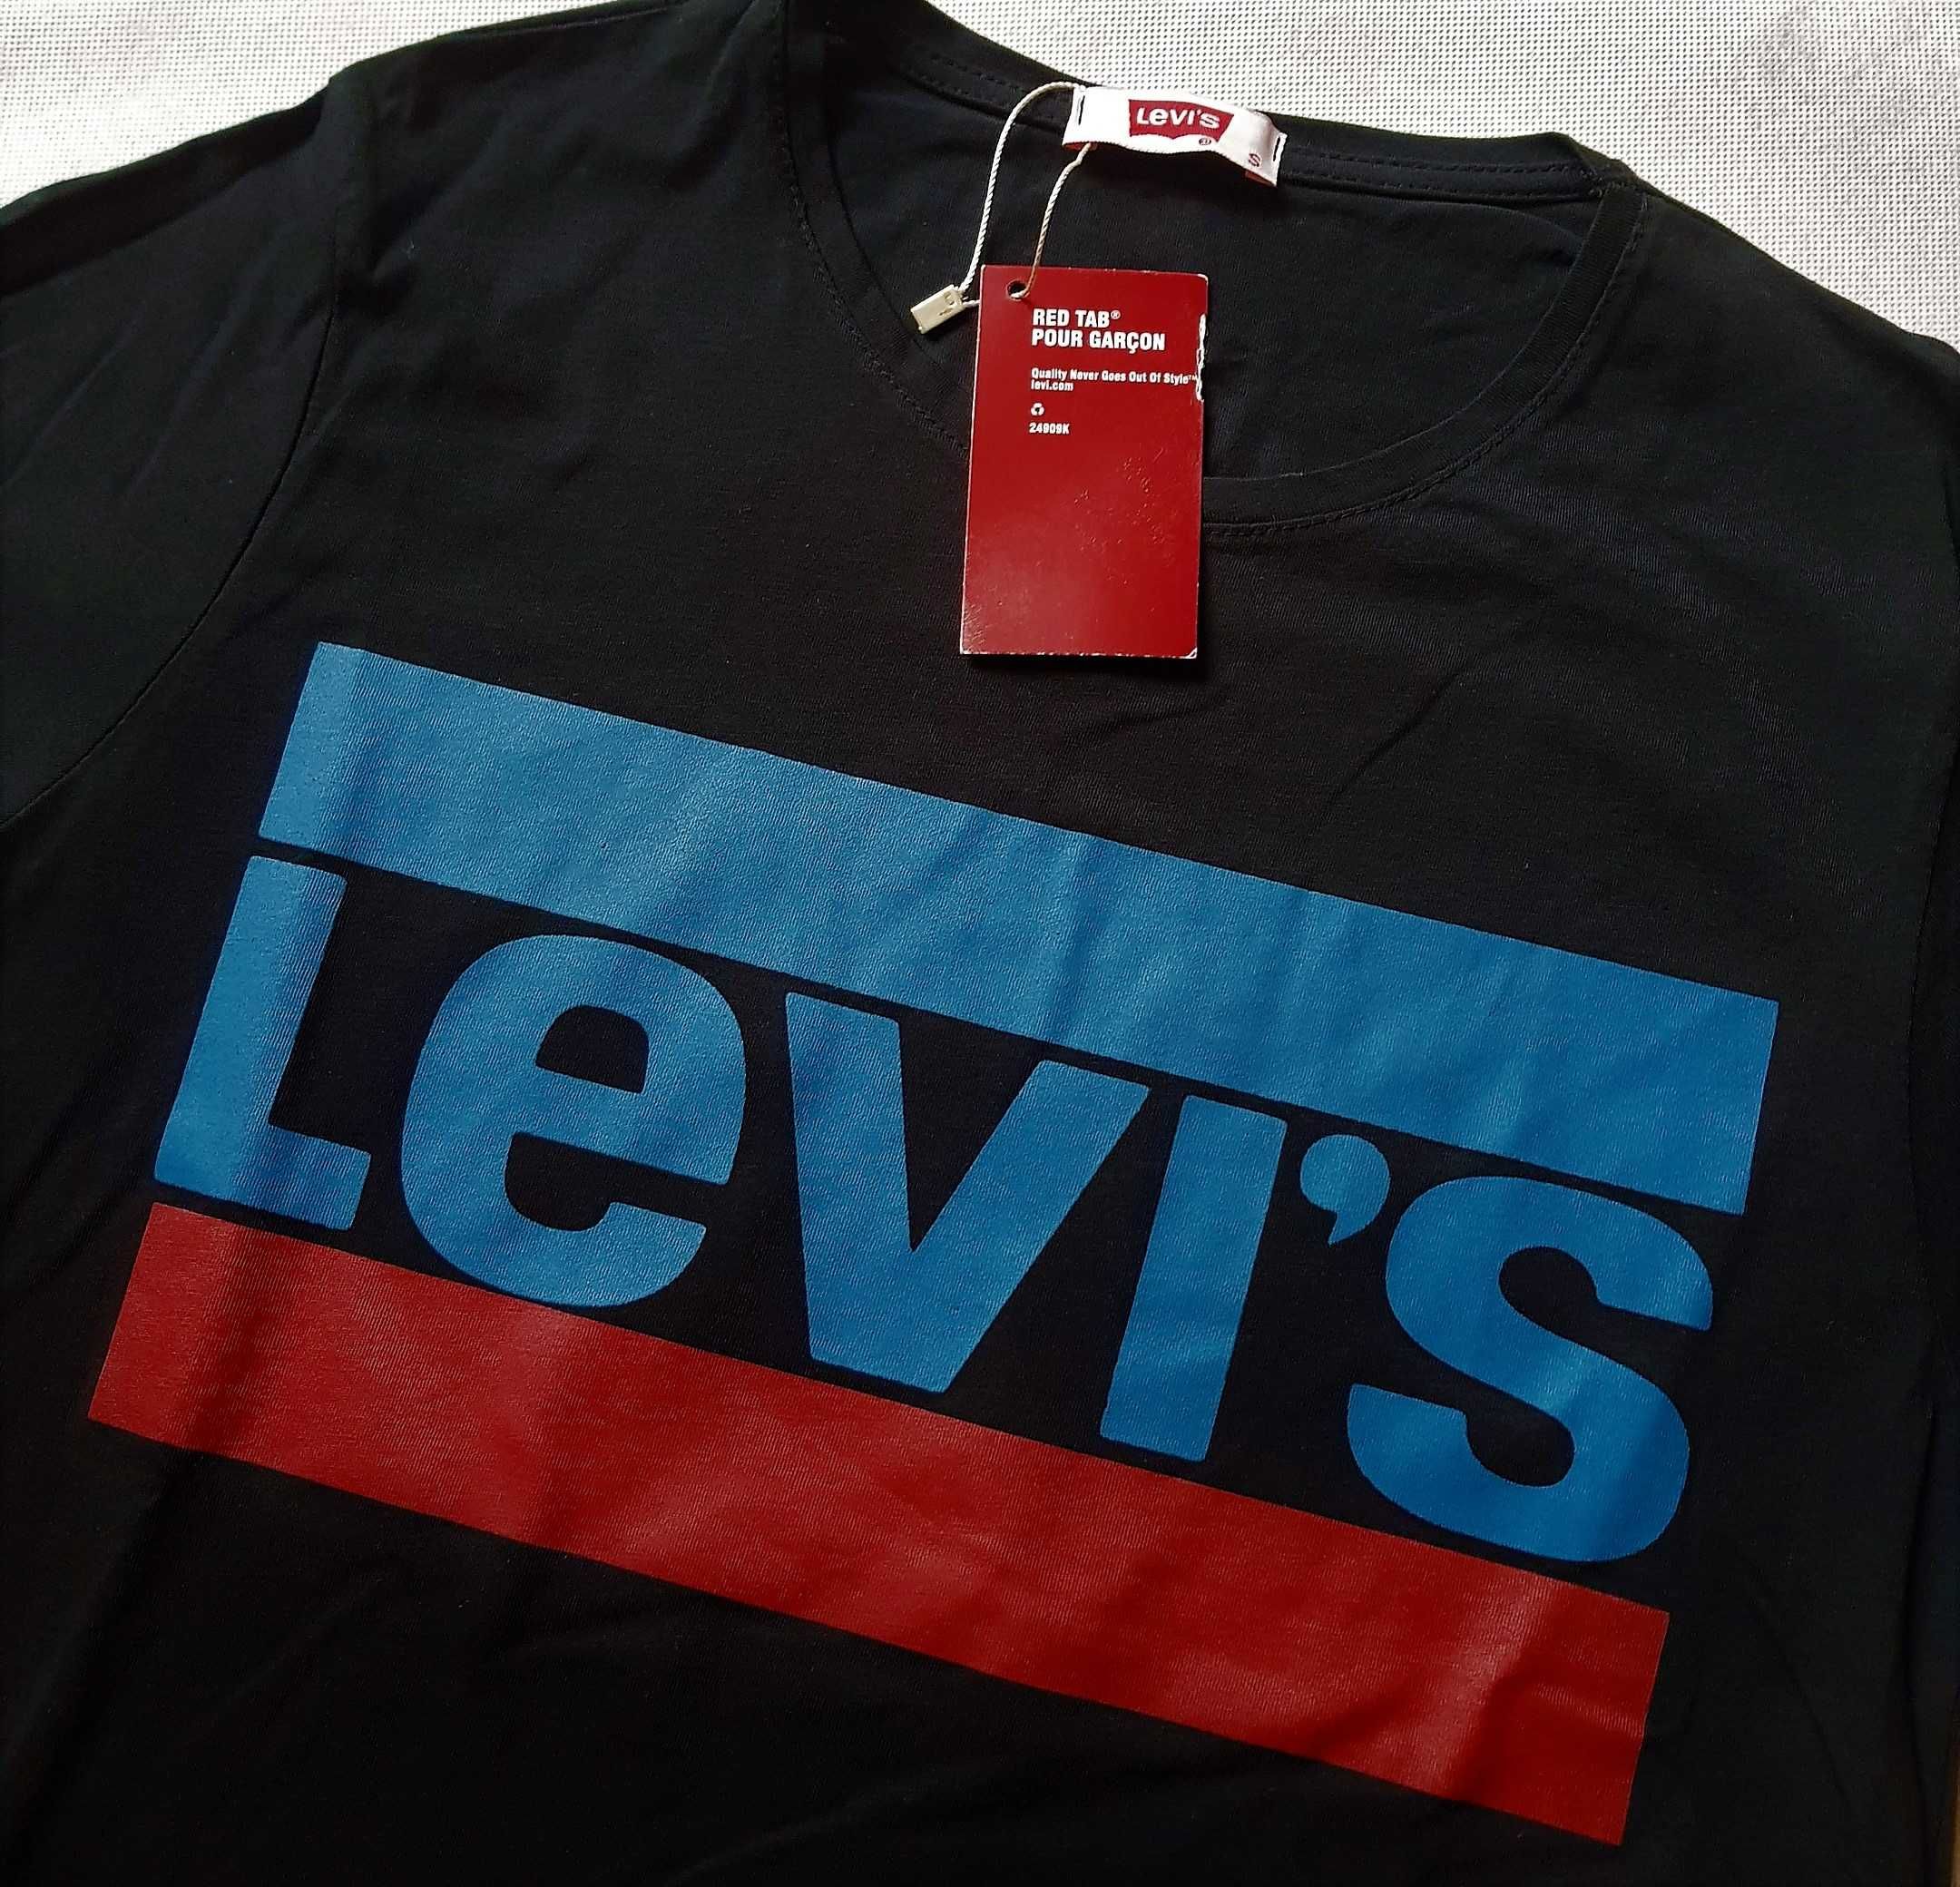 Nowa koszulka T-shirt LEVIS czarna OKAZJA tanio prezent S